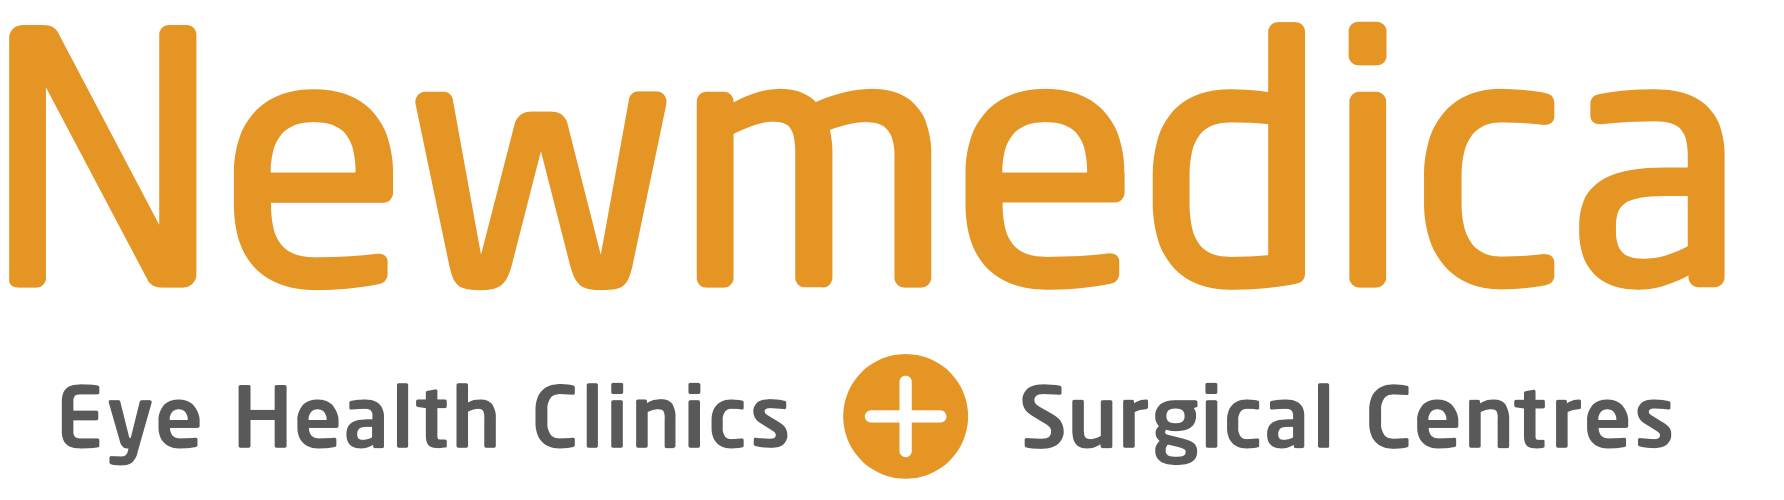 Exeter – Newmedica logo